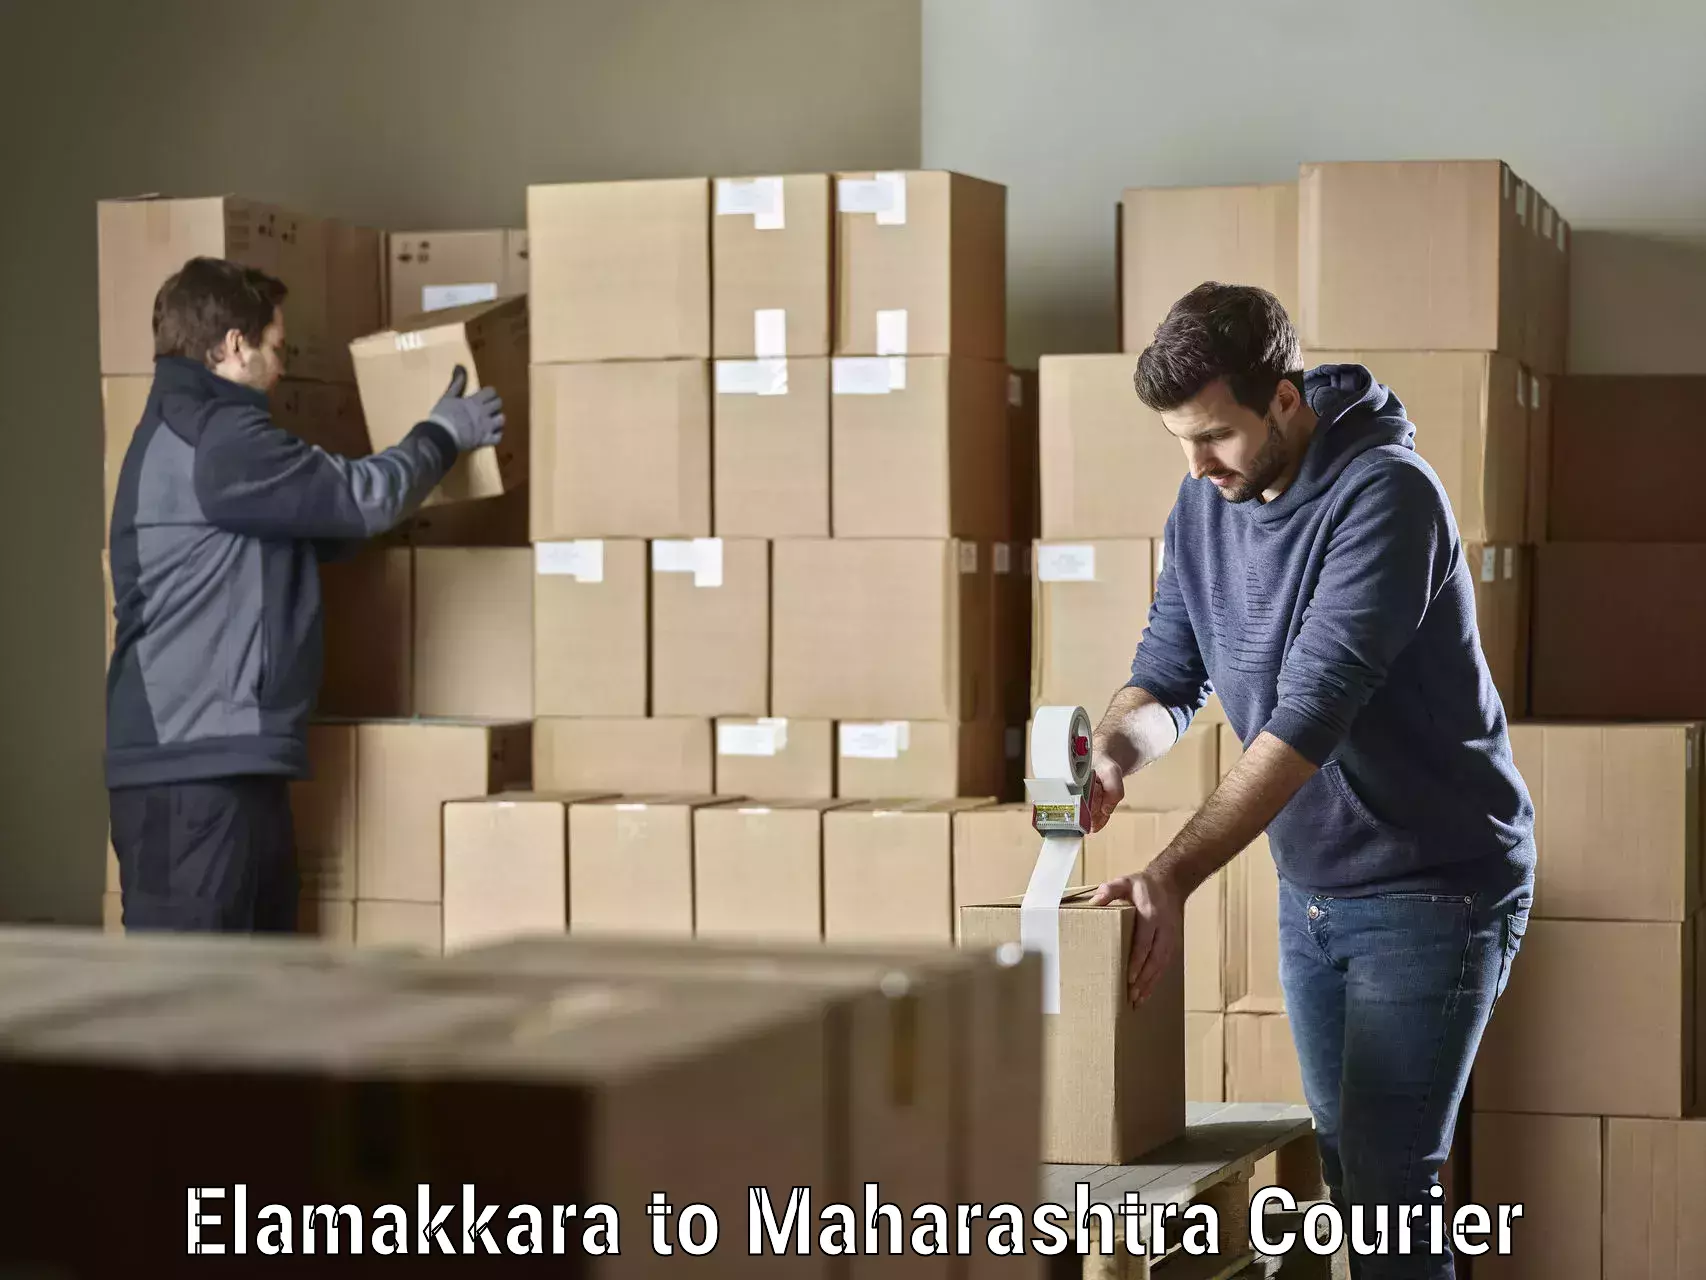 Global courier networks Elamakkara to Ganpatipule